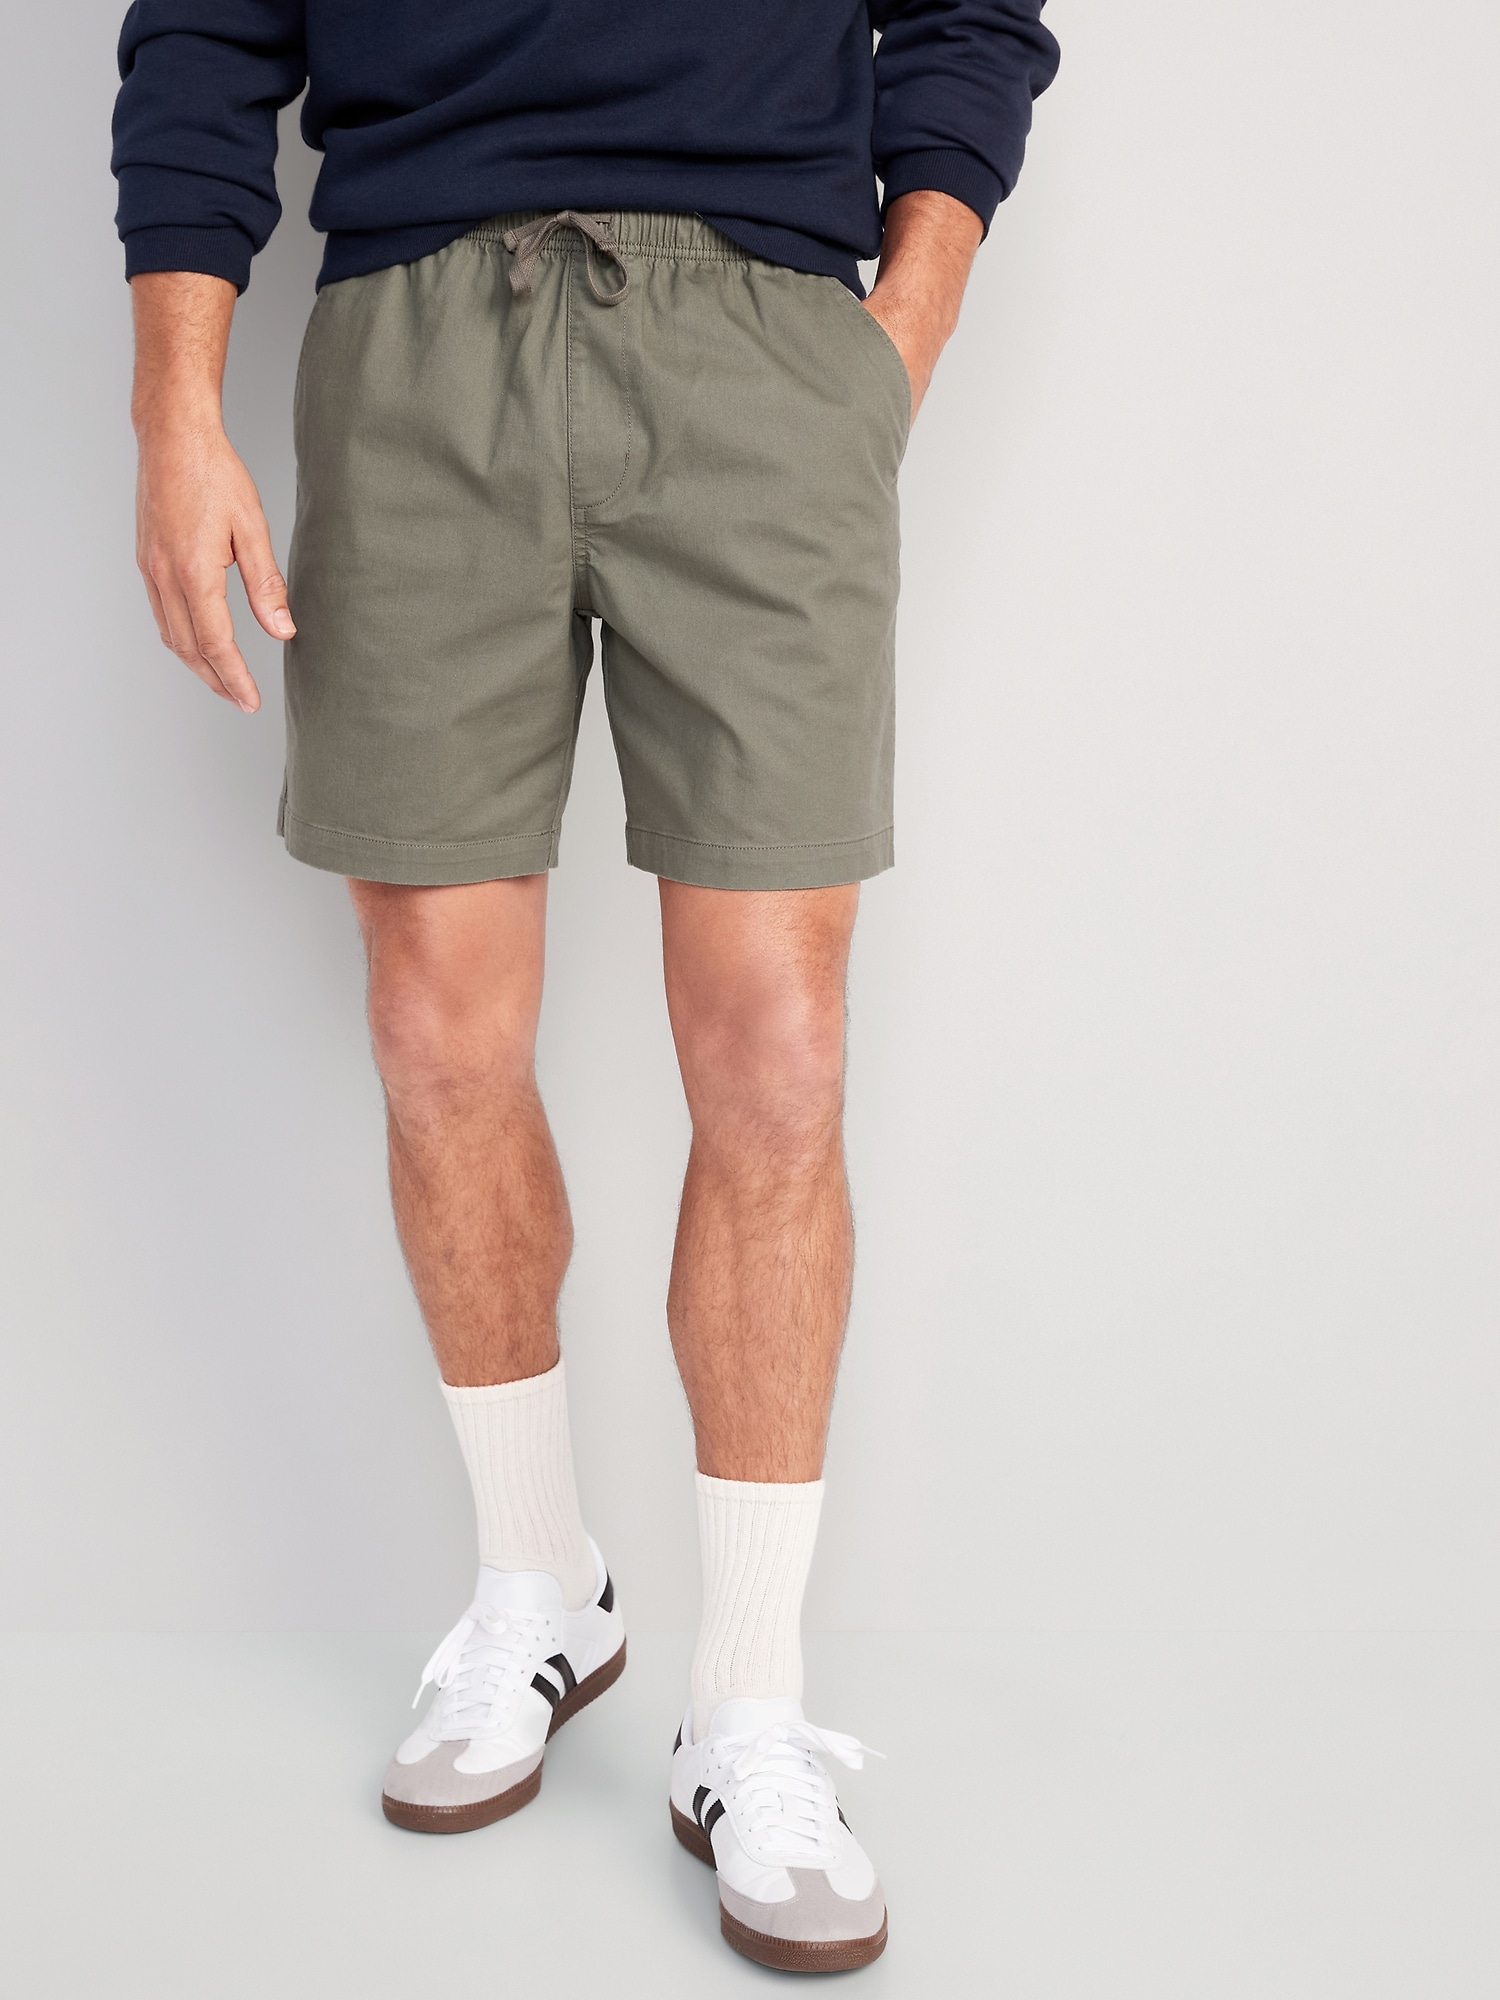 Twill Shorts for Men